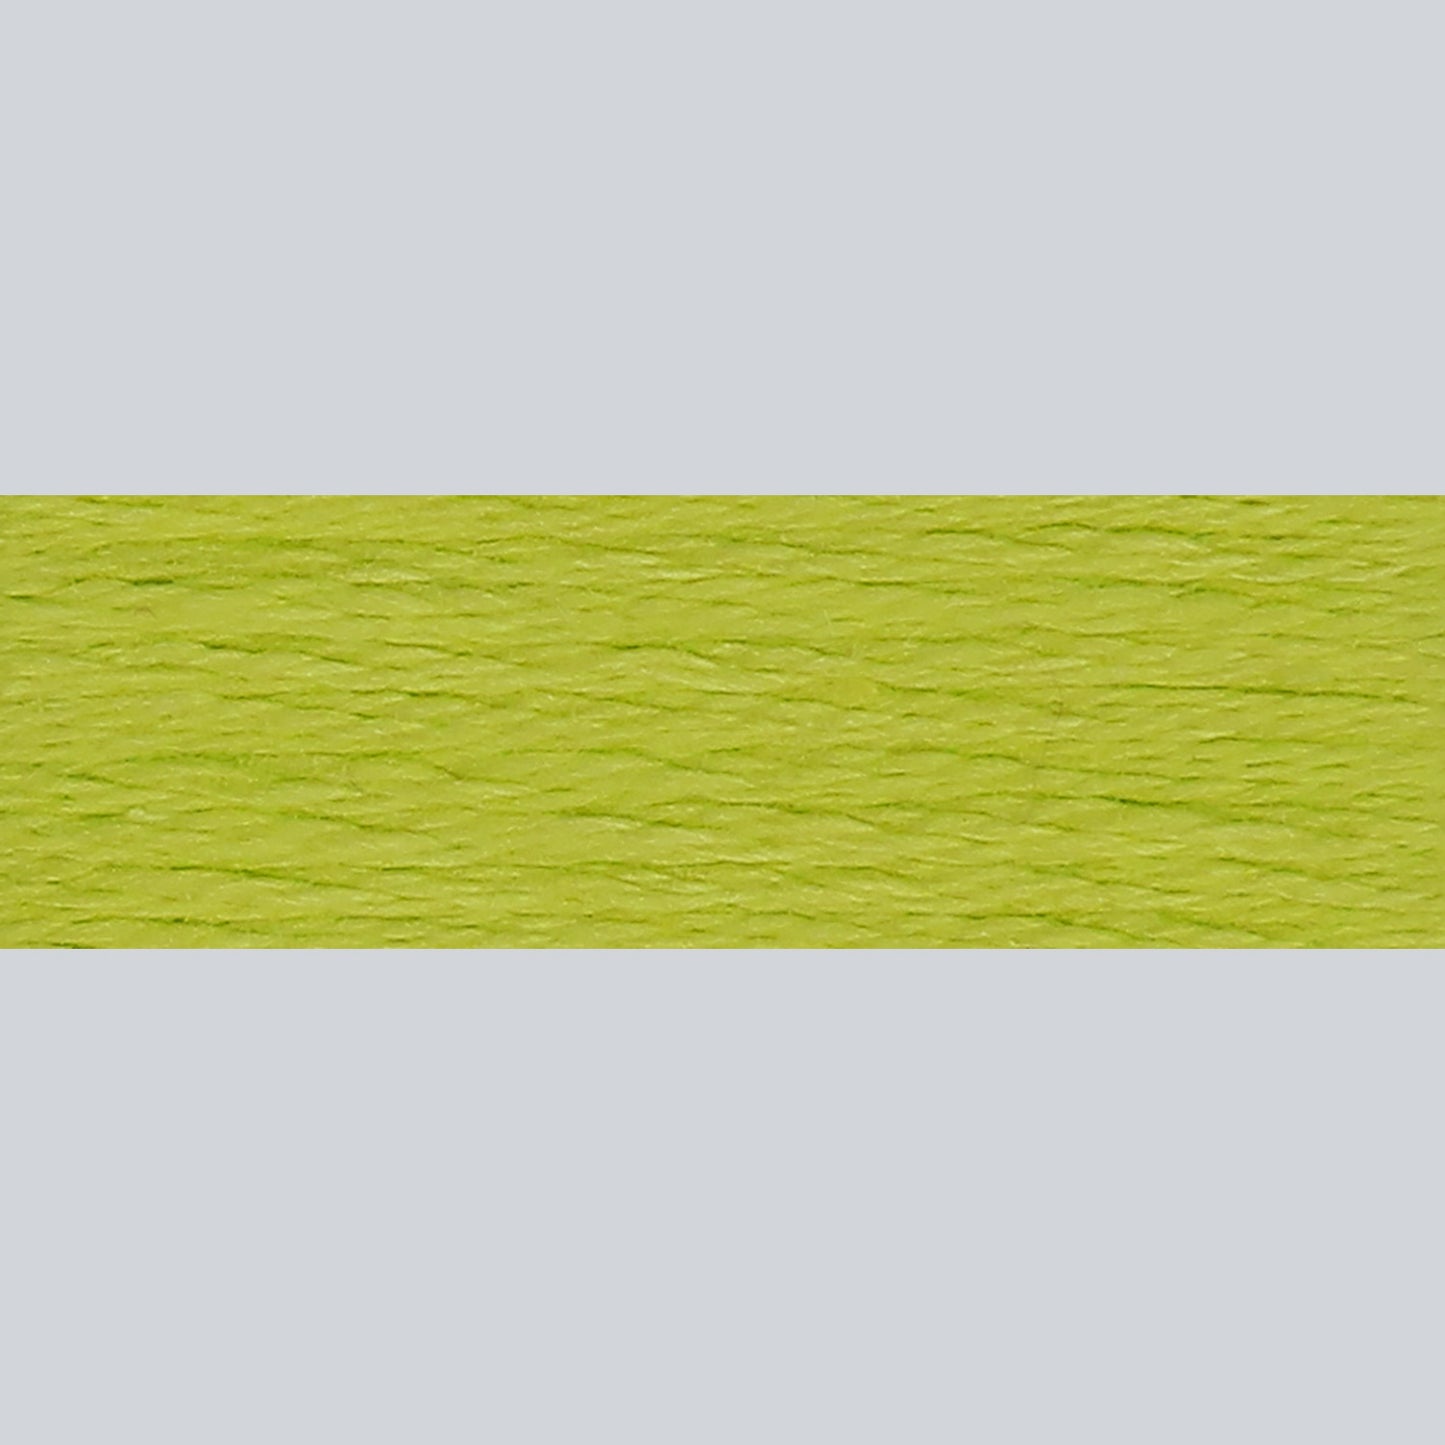 DMC Embroidery Floss - 16 Light Chartreuse Alternative View #1